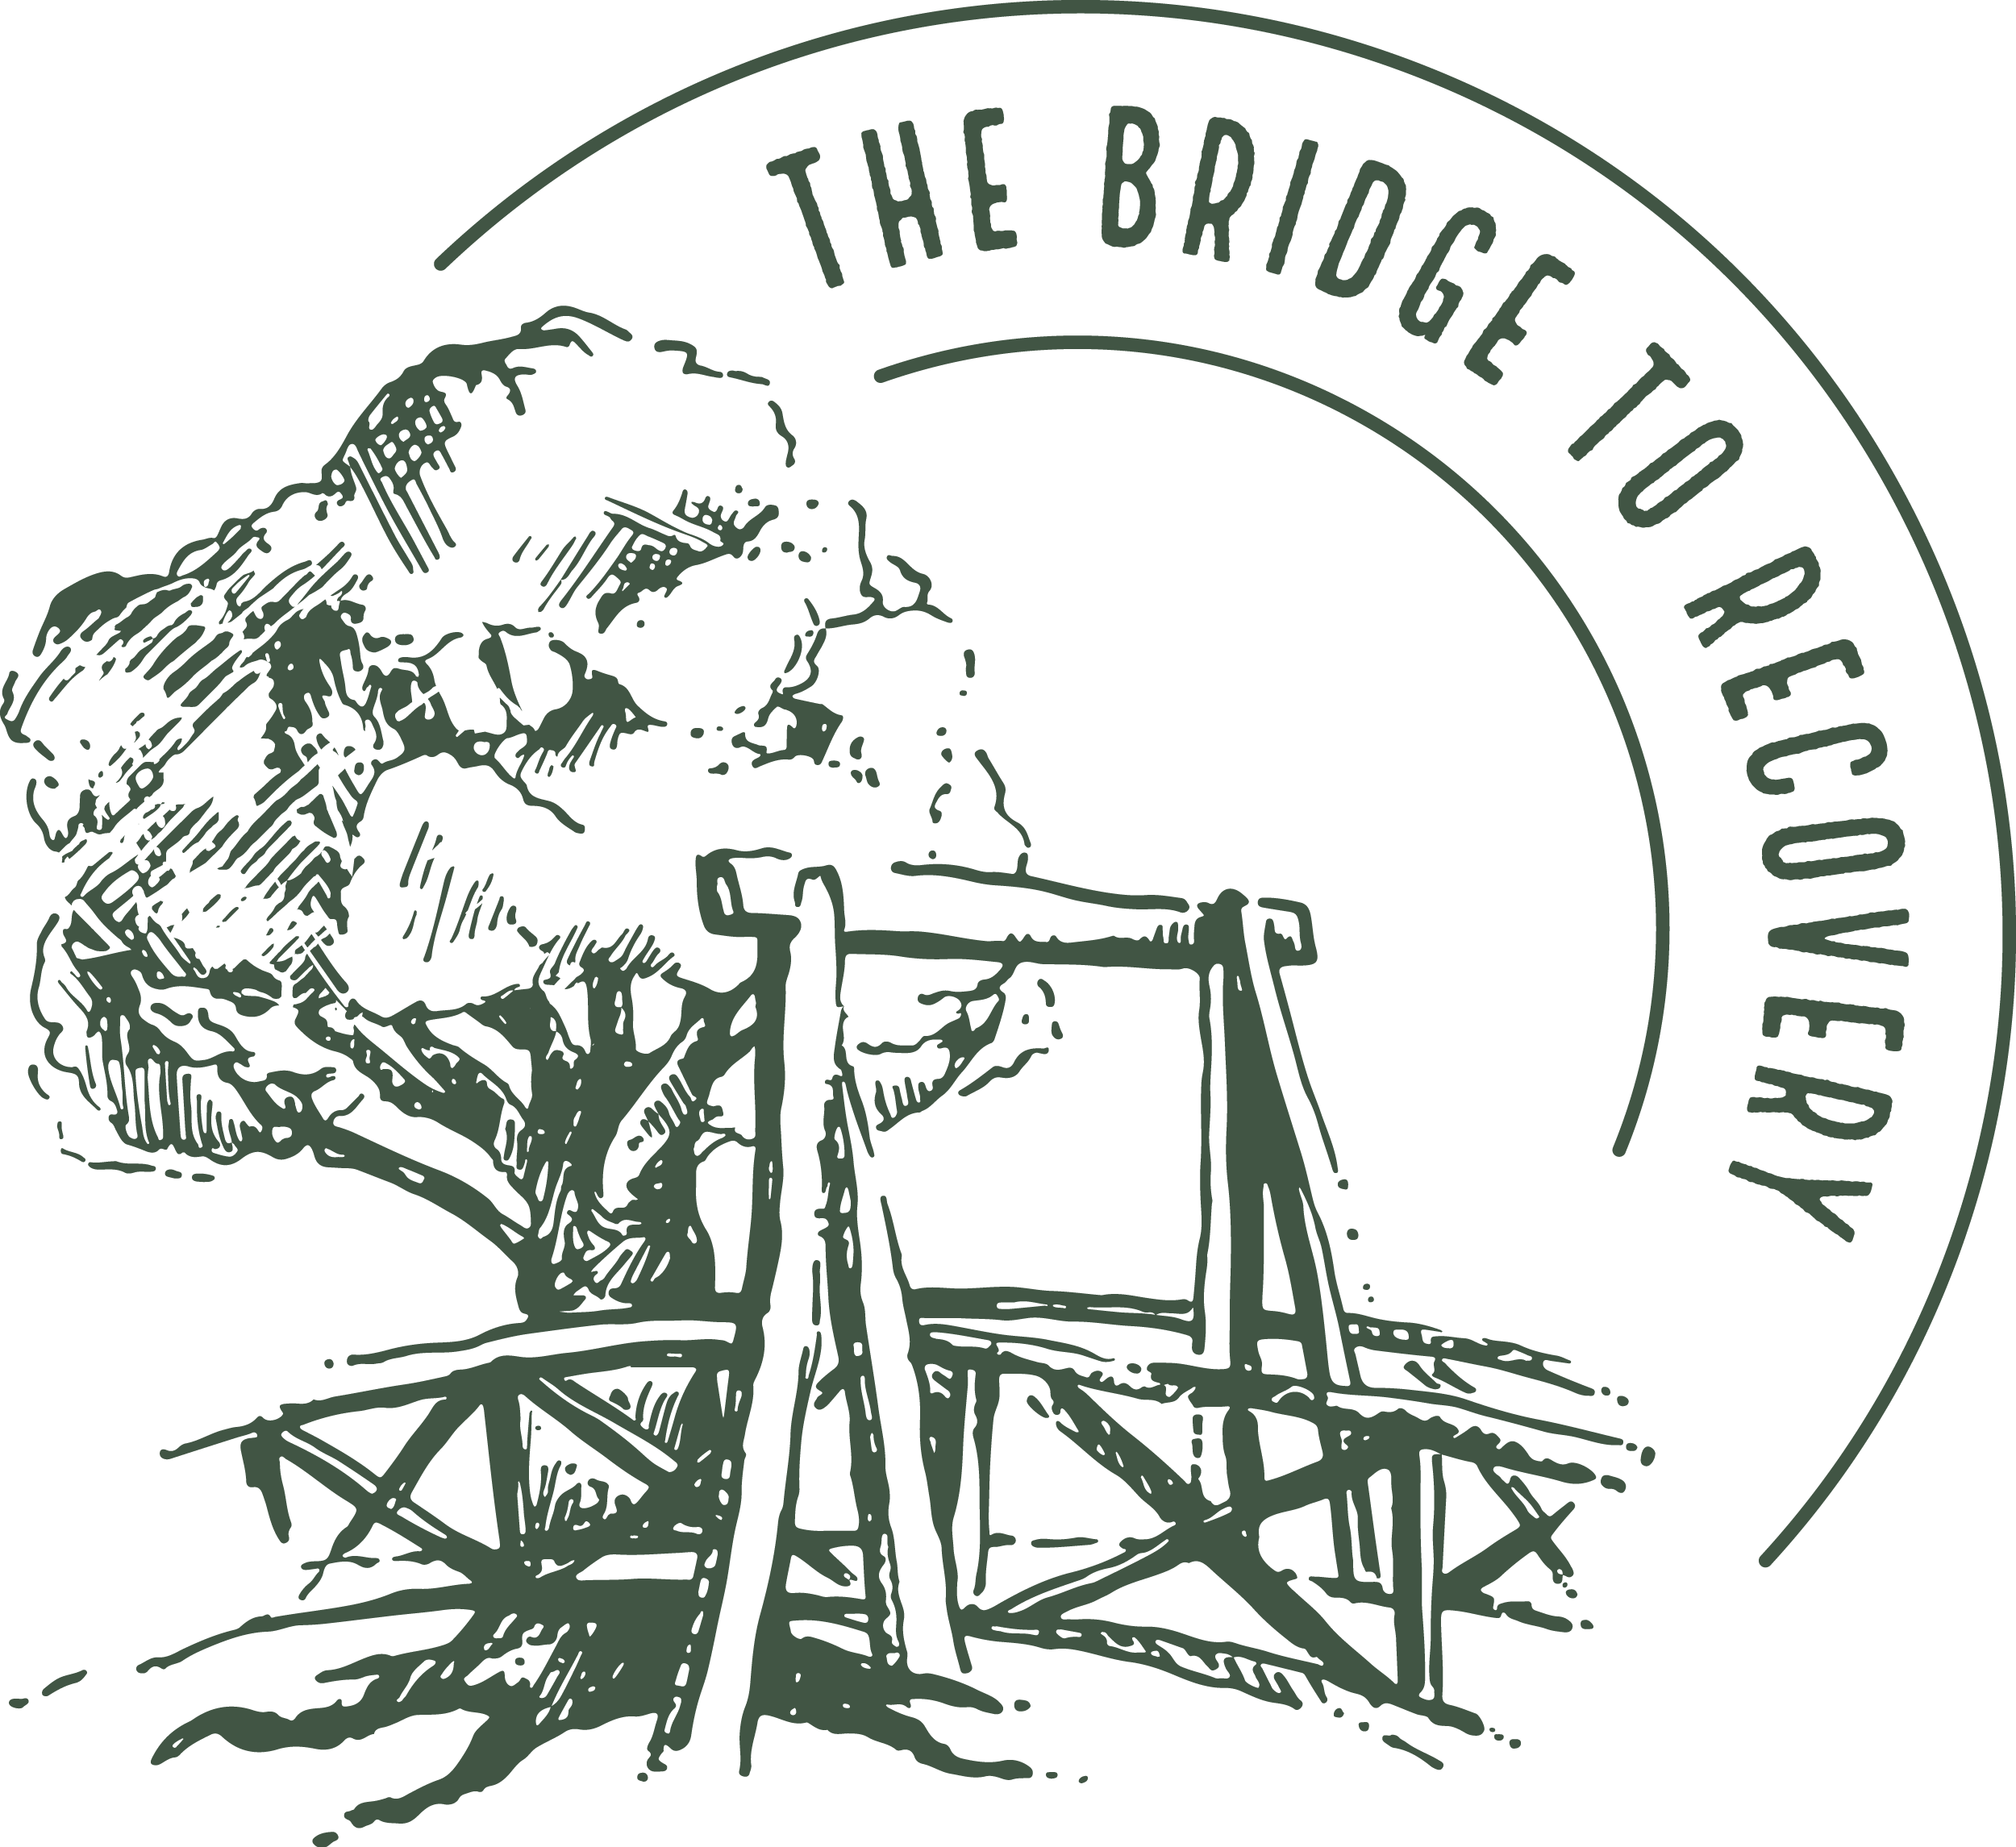 The Bridge to Recovery logo